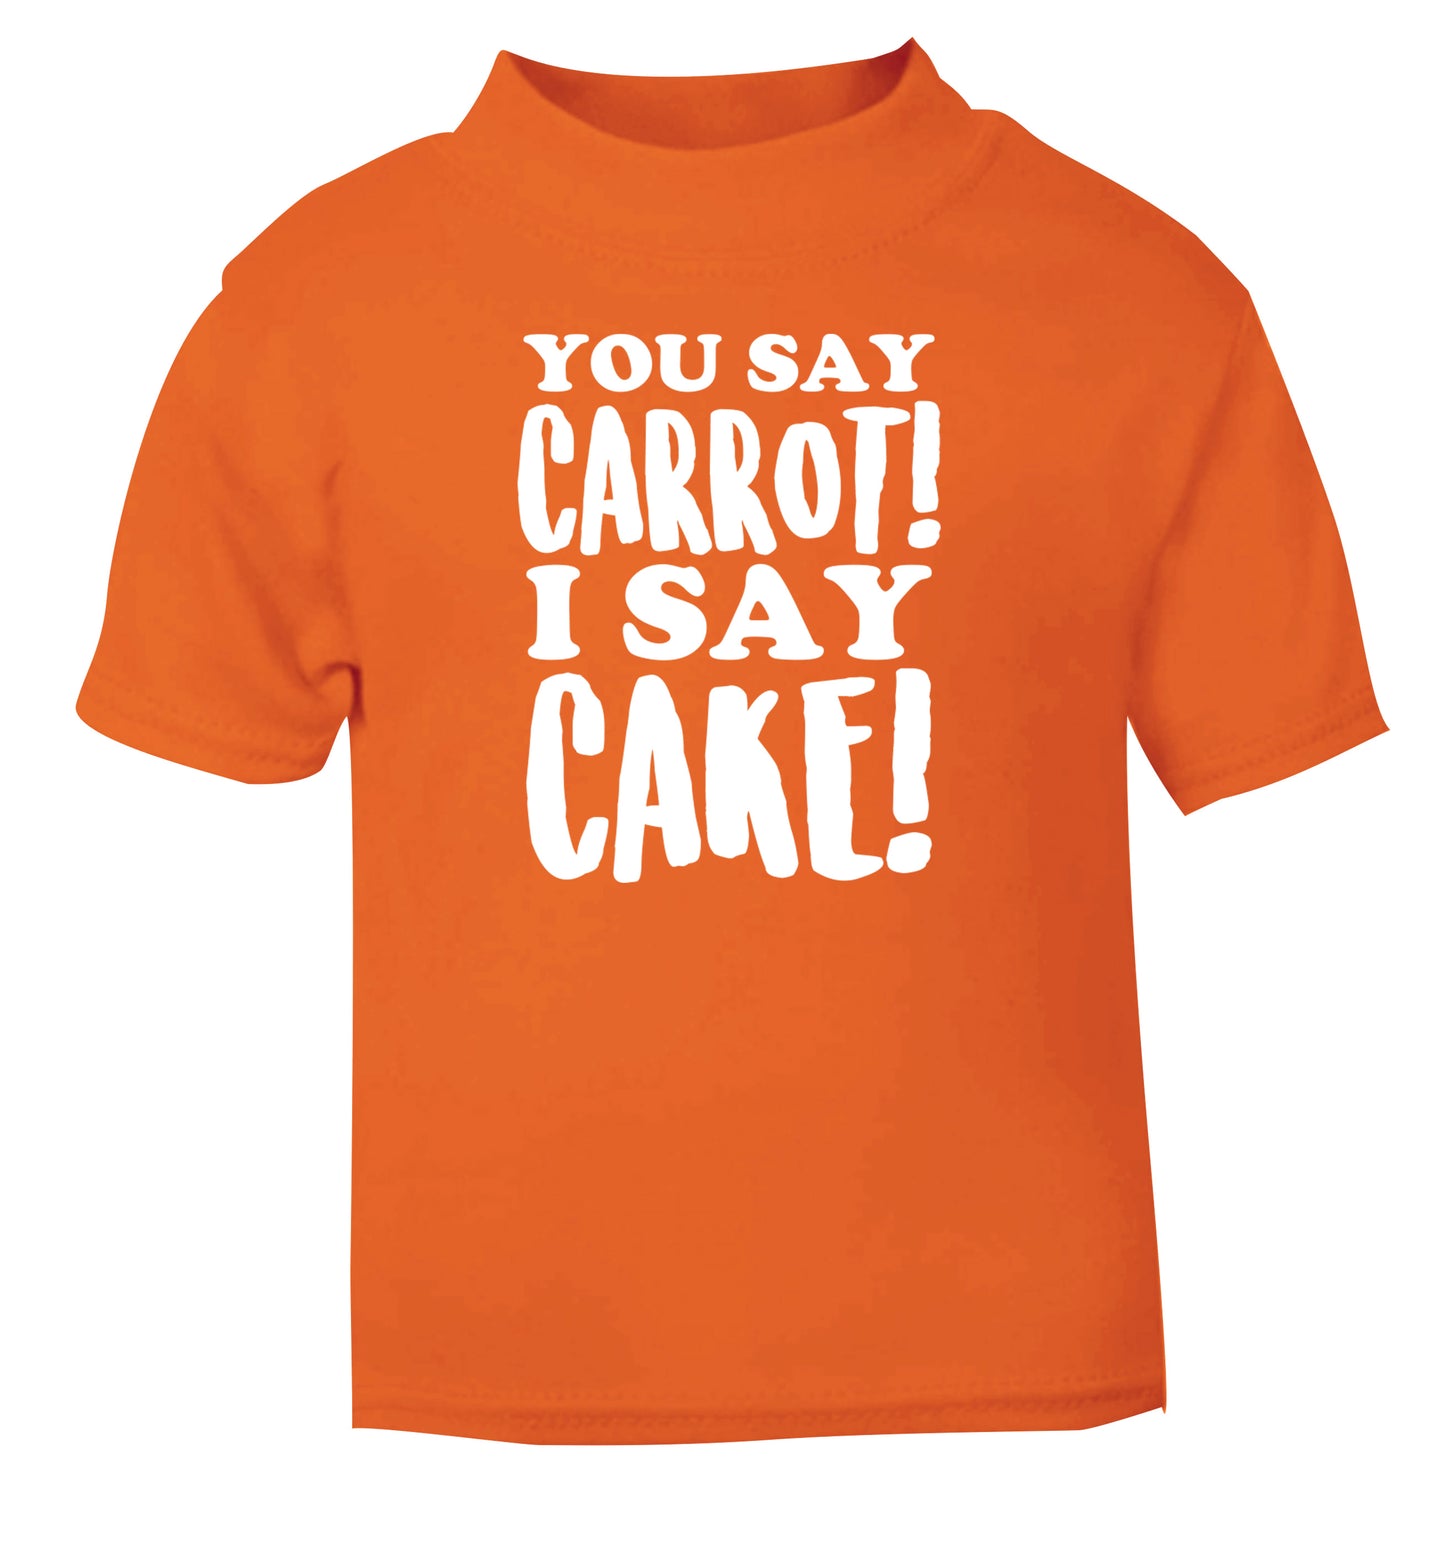 You say carrot I say cake! orange Baby Toddler Tshirt 2 Years